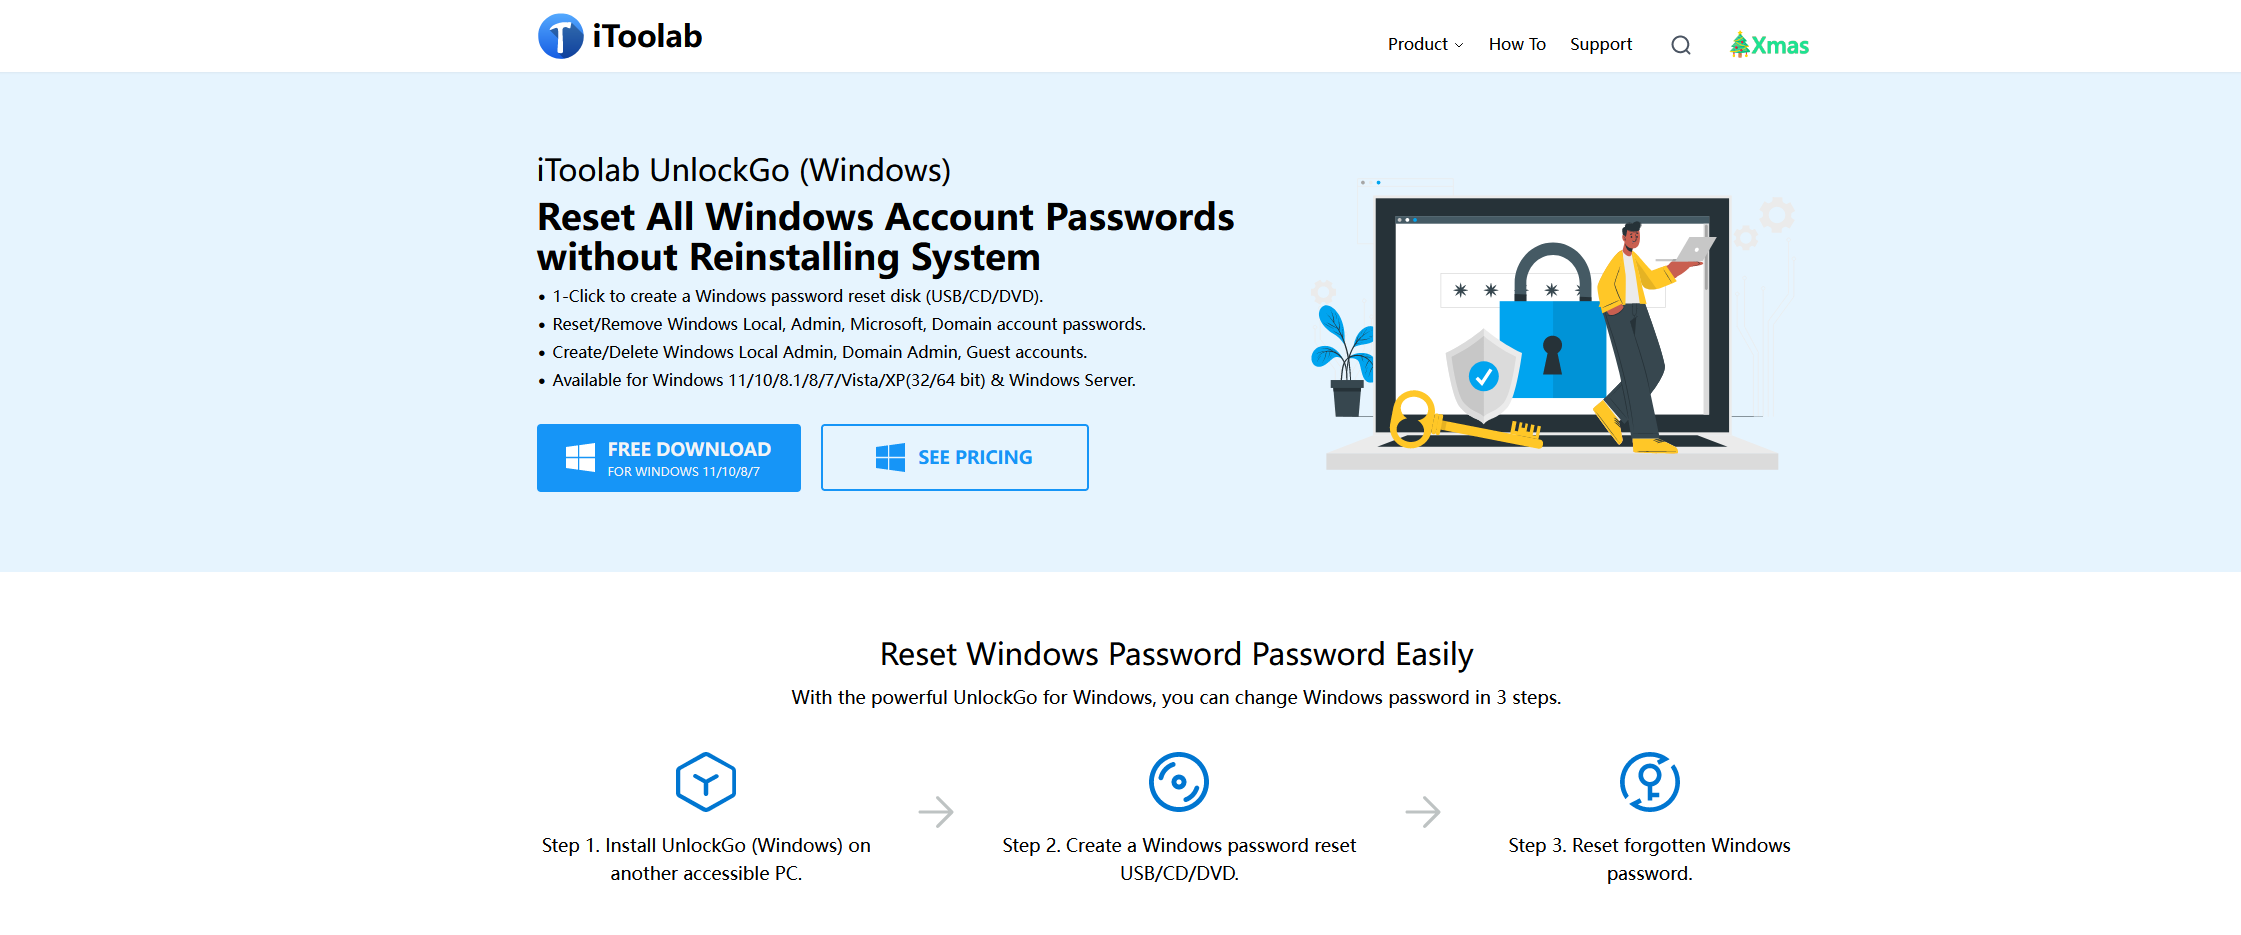 iToolab UnlockGo (Windows) Landing page